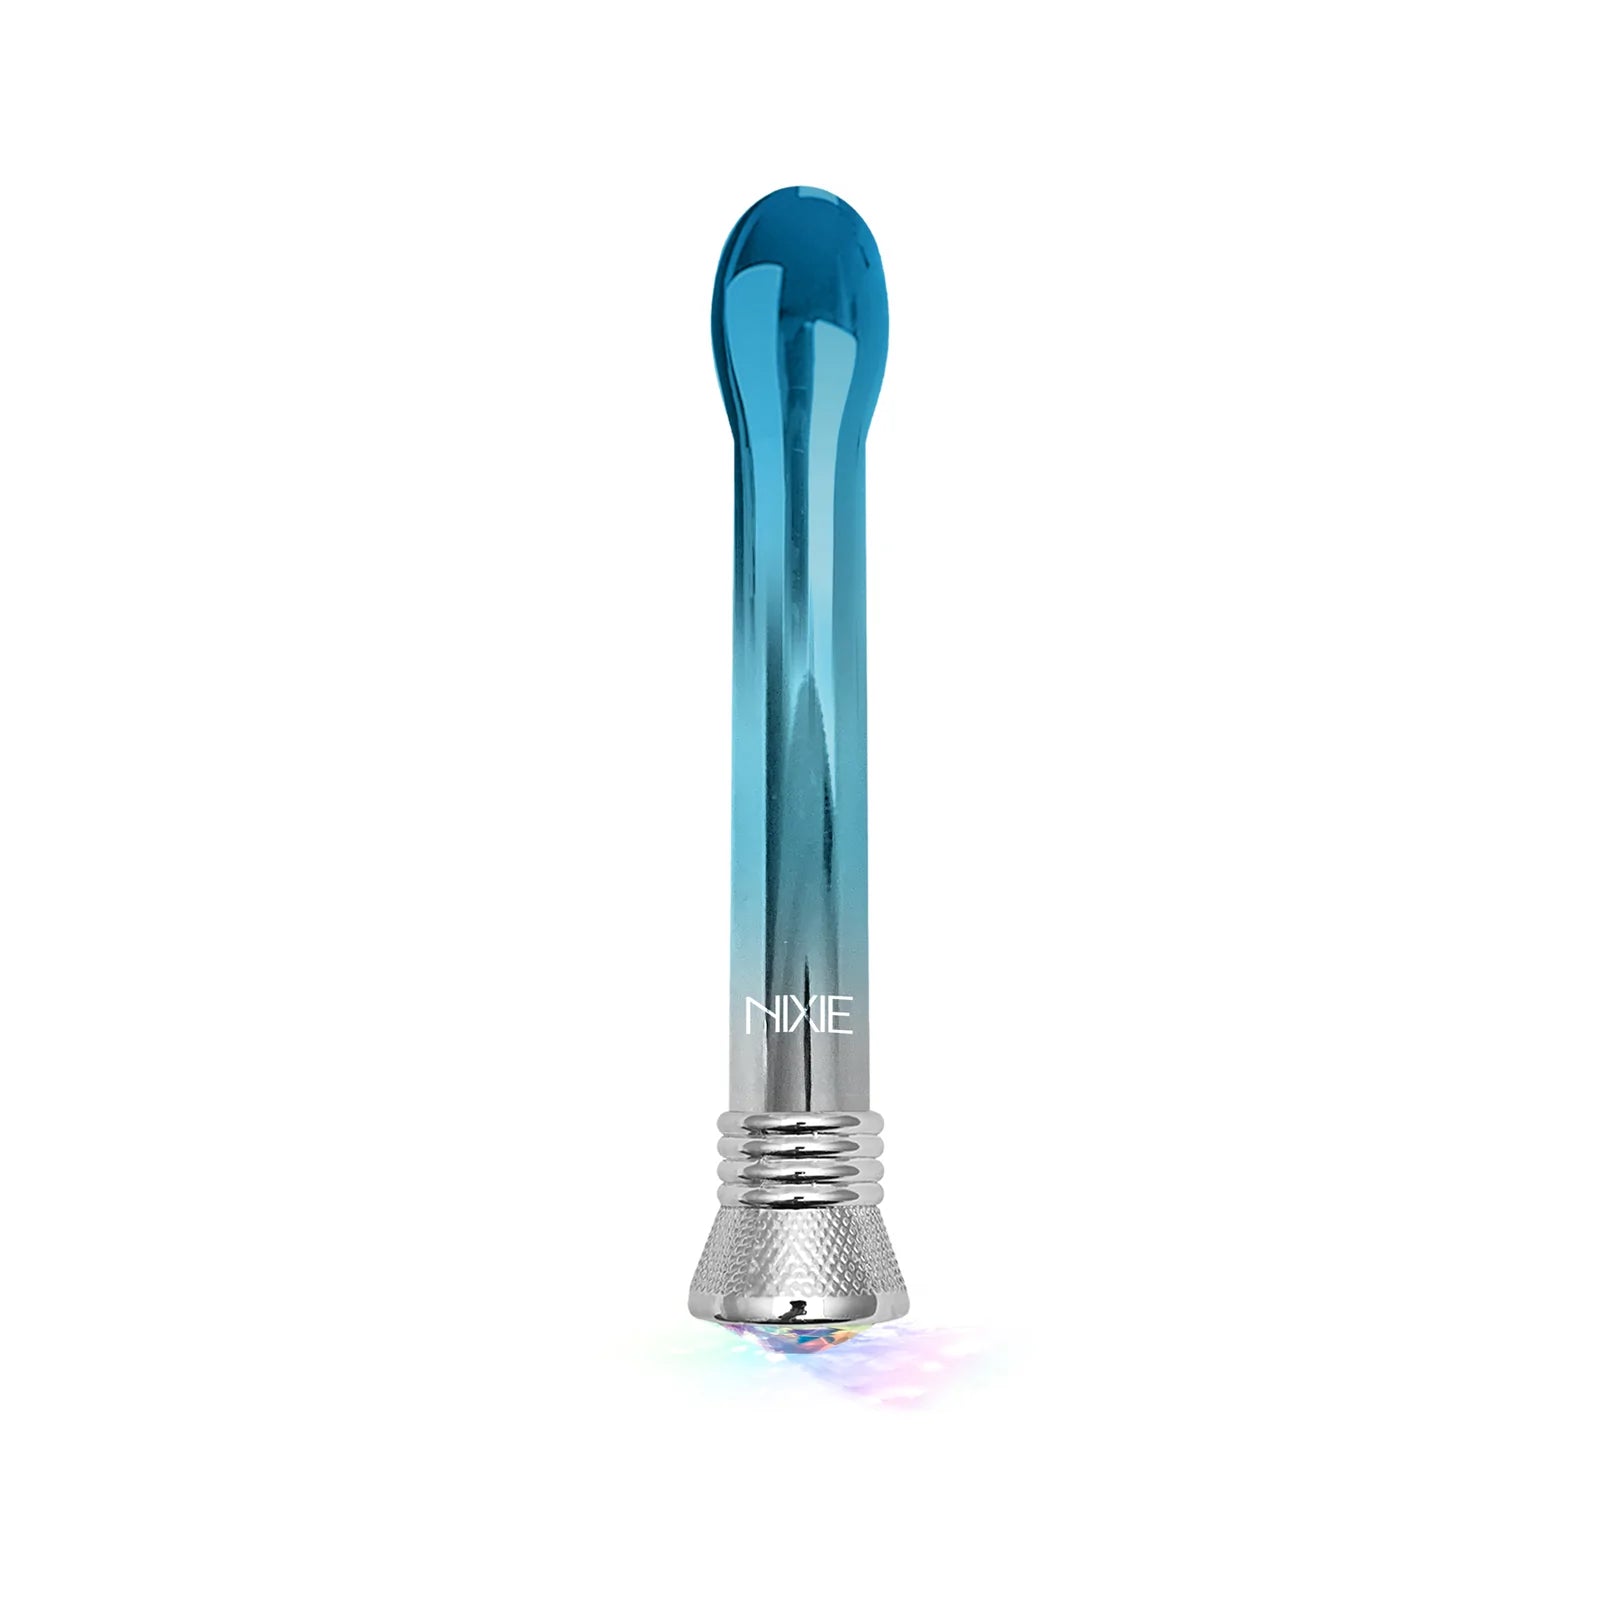 Nixie Waterproof Bulb Vibrator- Blue Ombre Glow